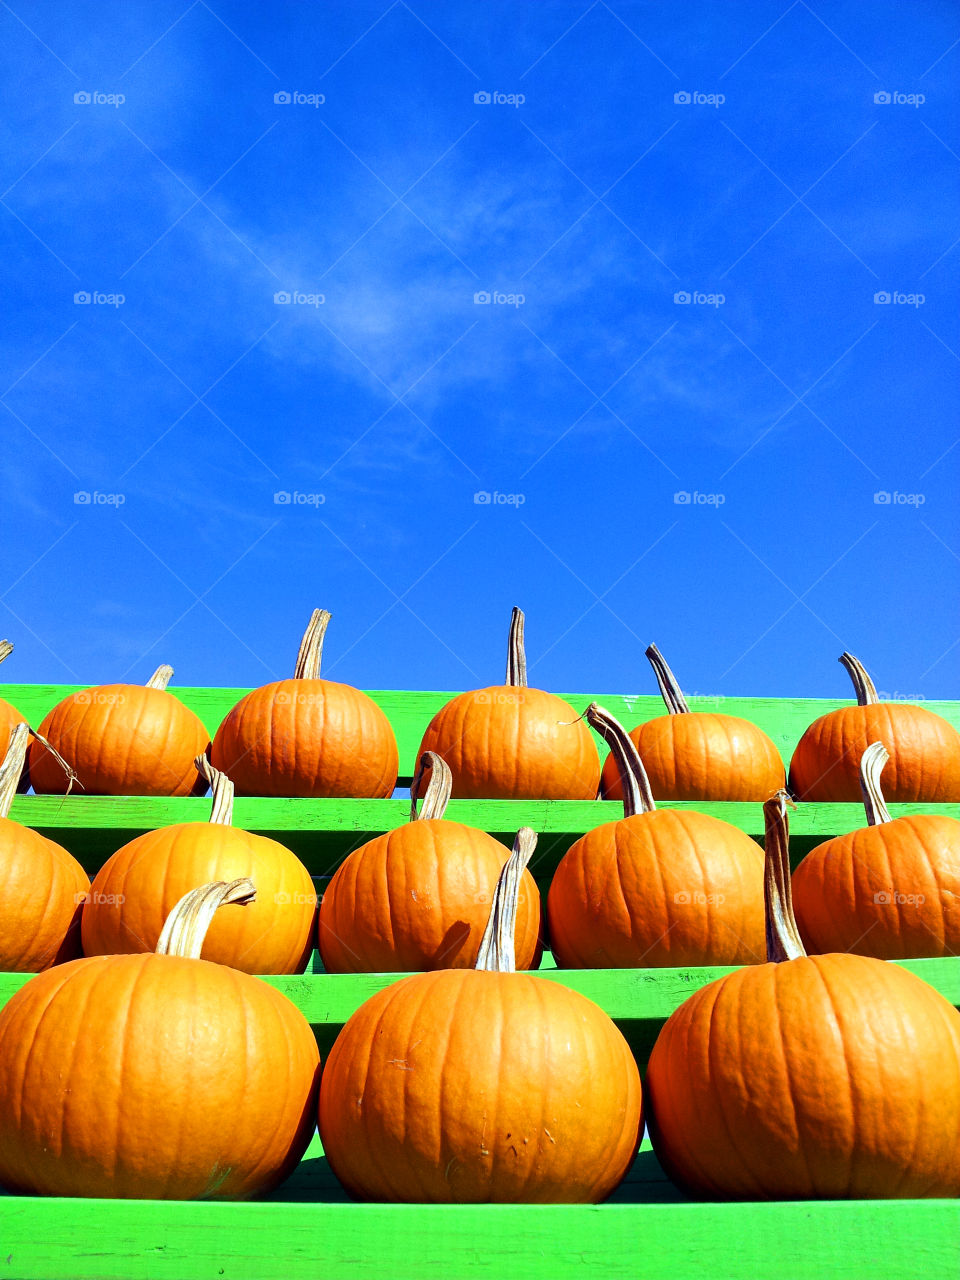 Display of pumpkins up for sale